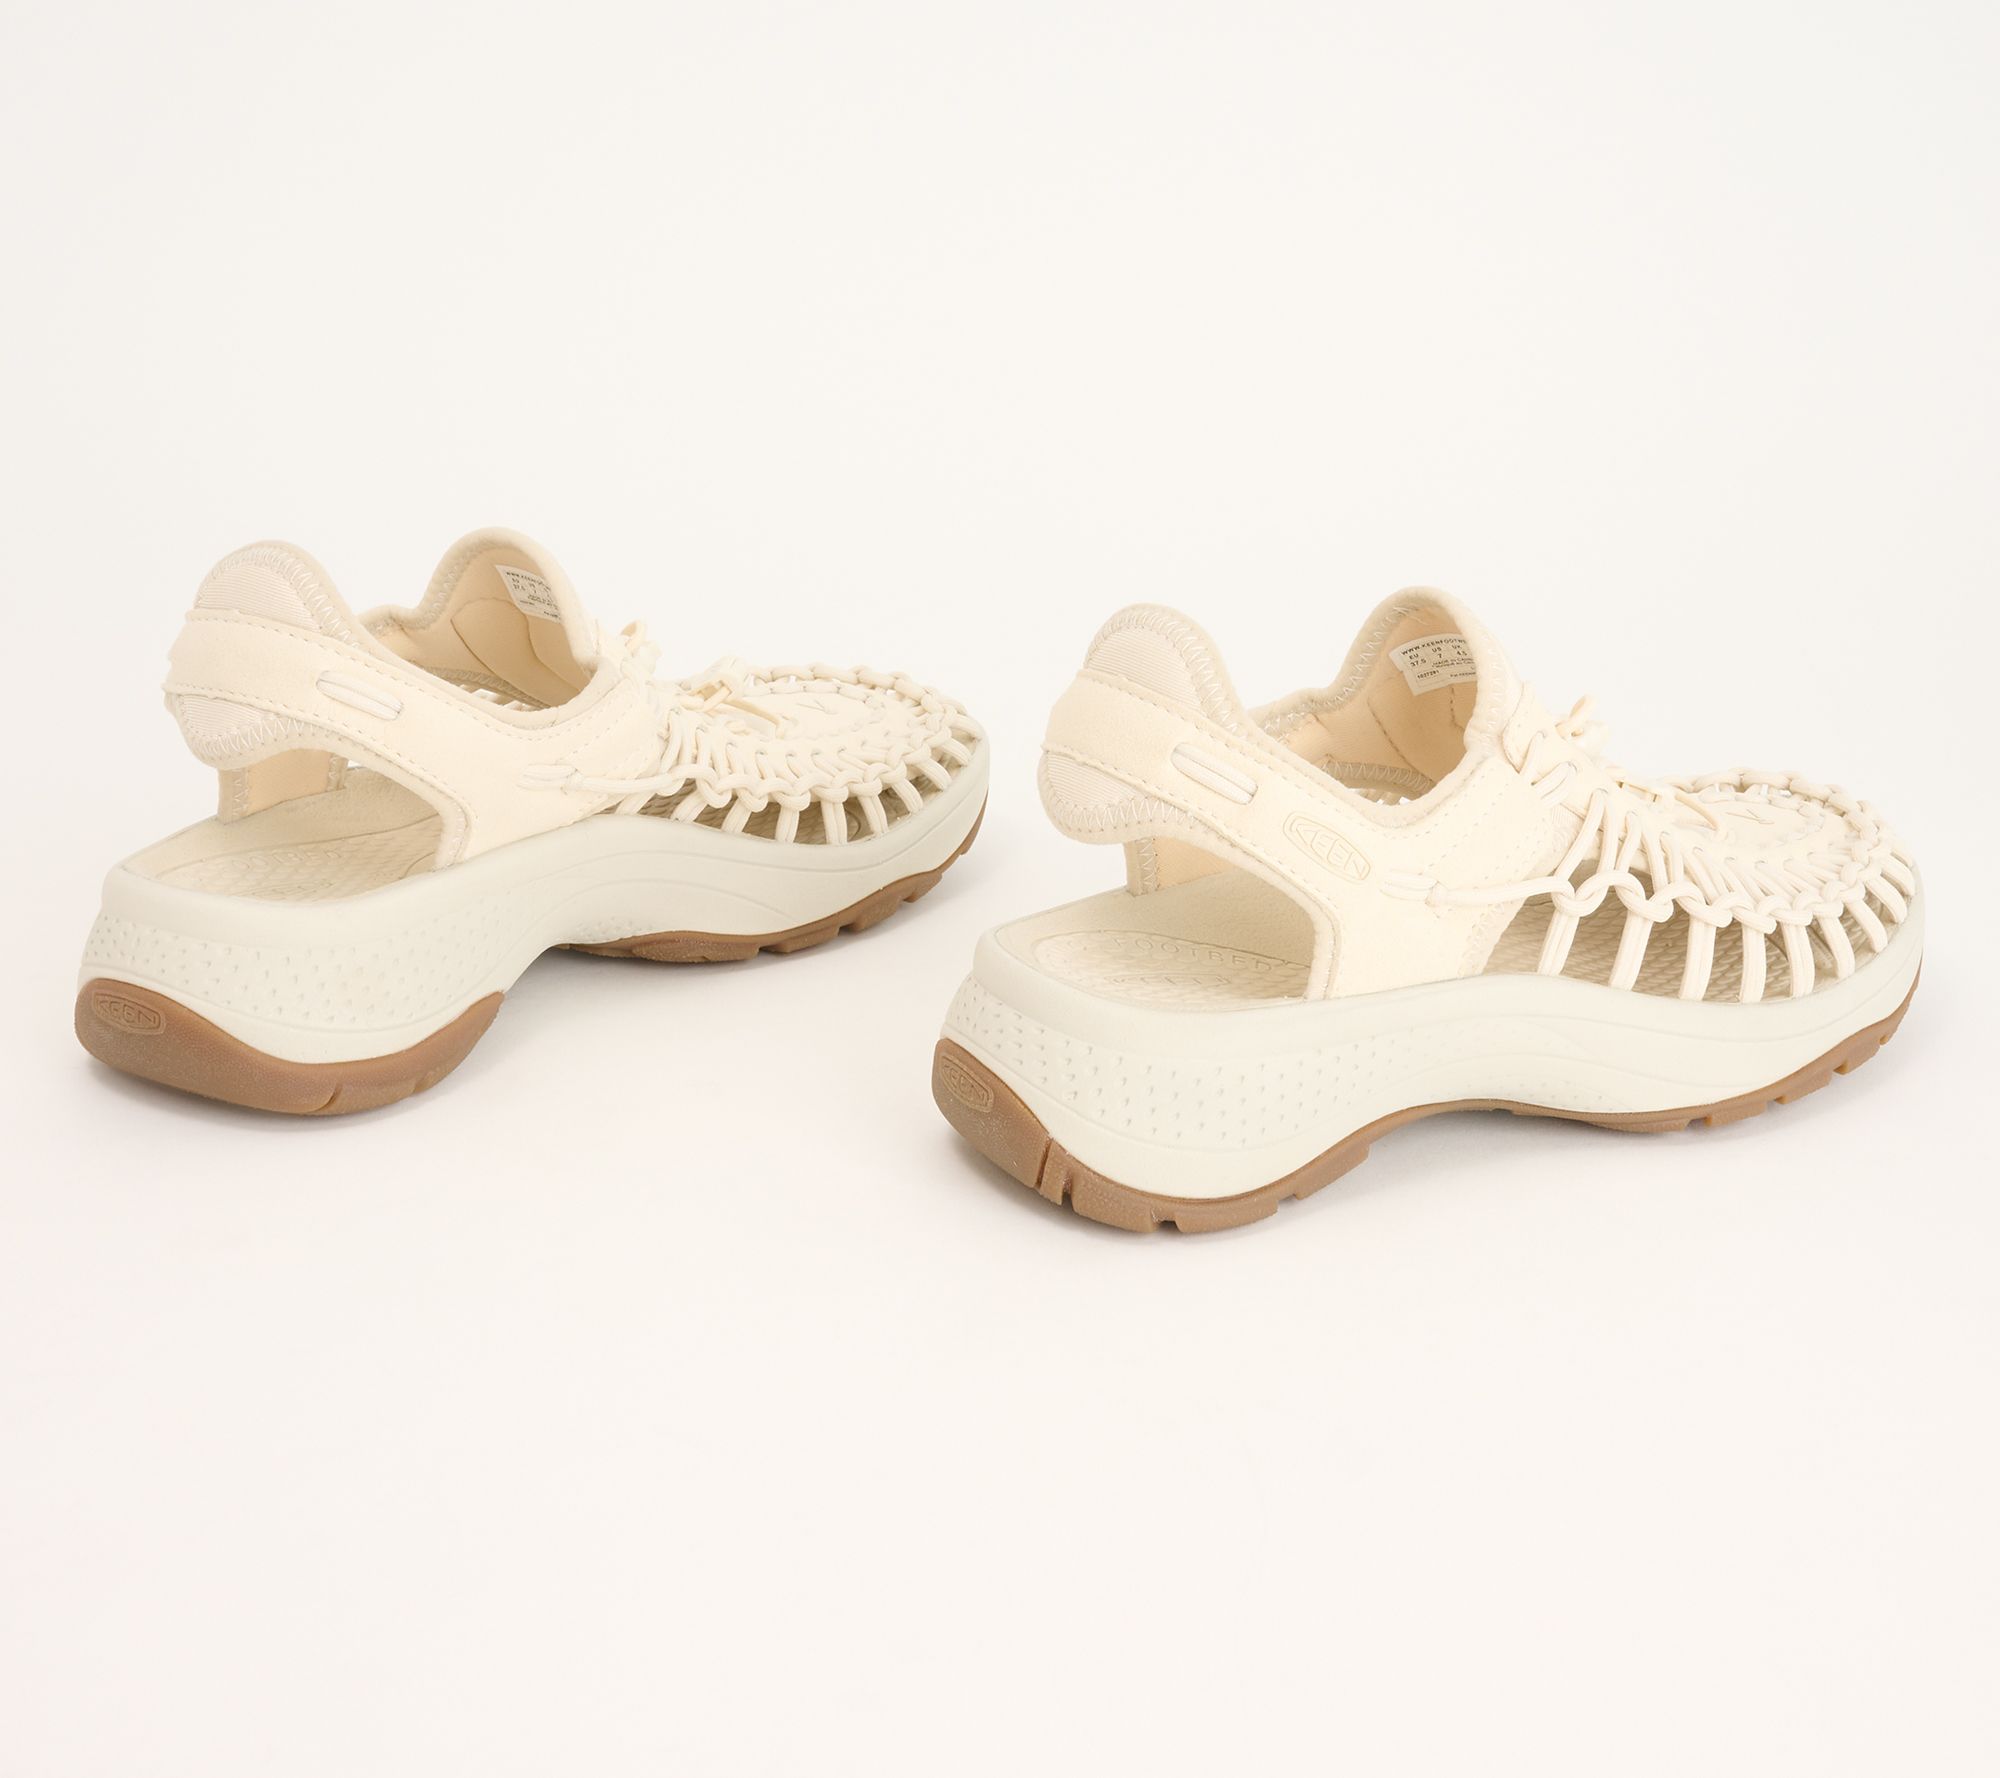 KEEN Braided Cord Bungee Sport Sandals - Uneek Astoria 